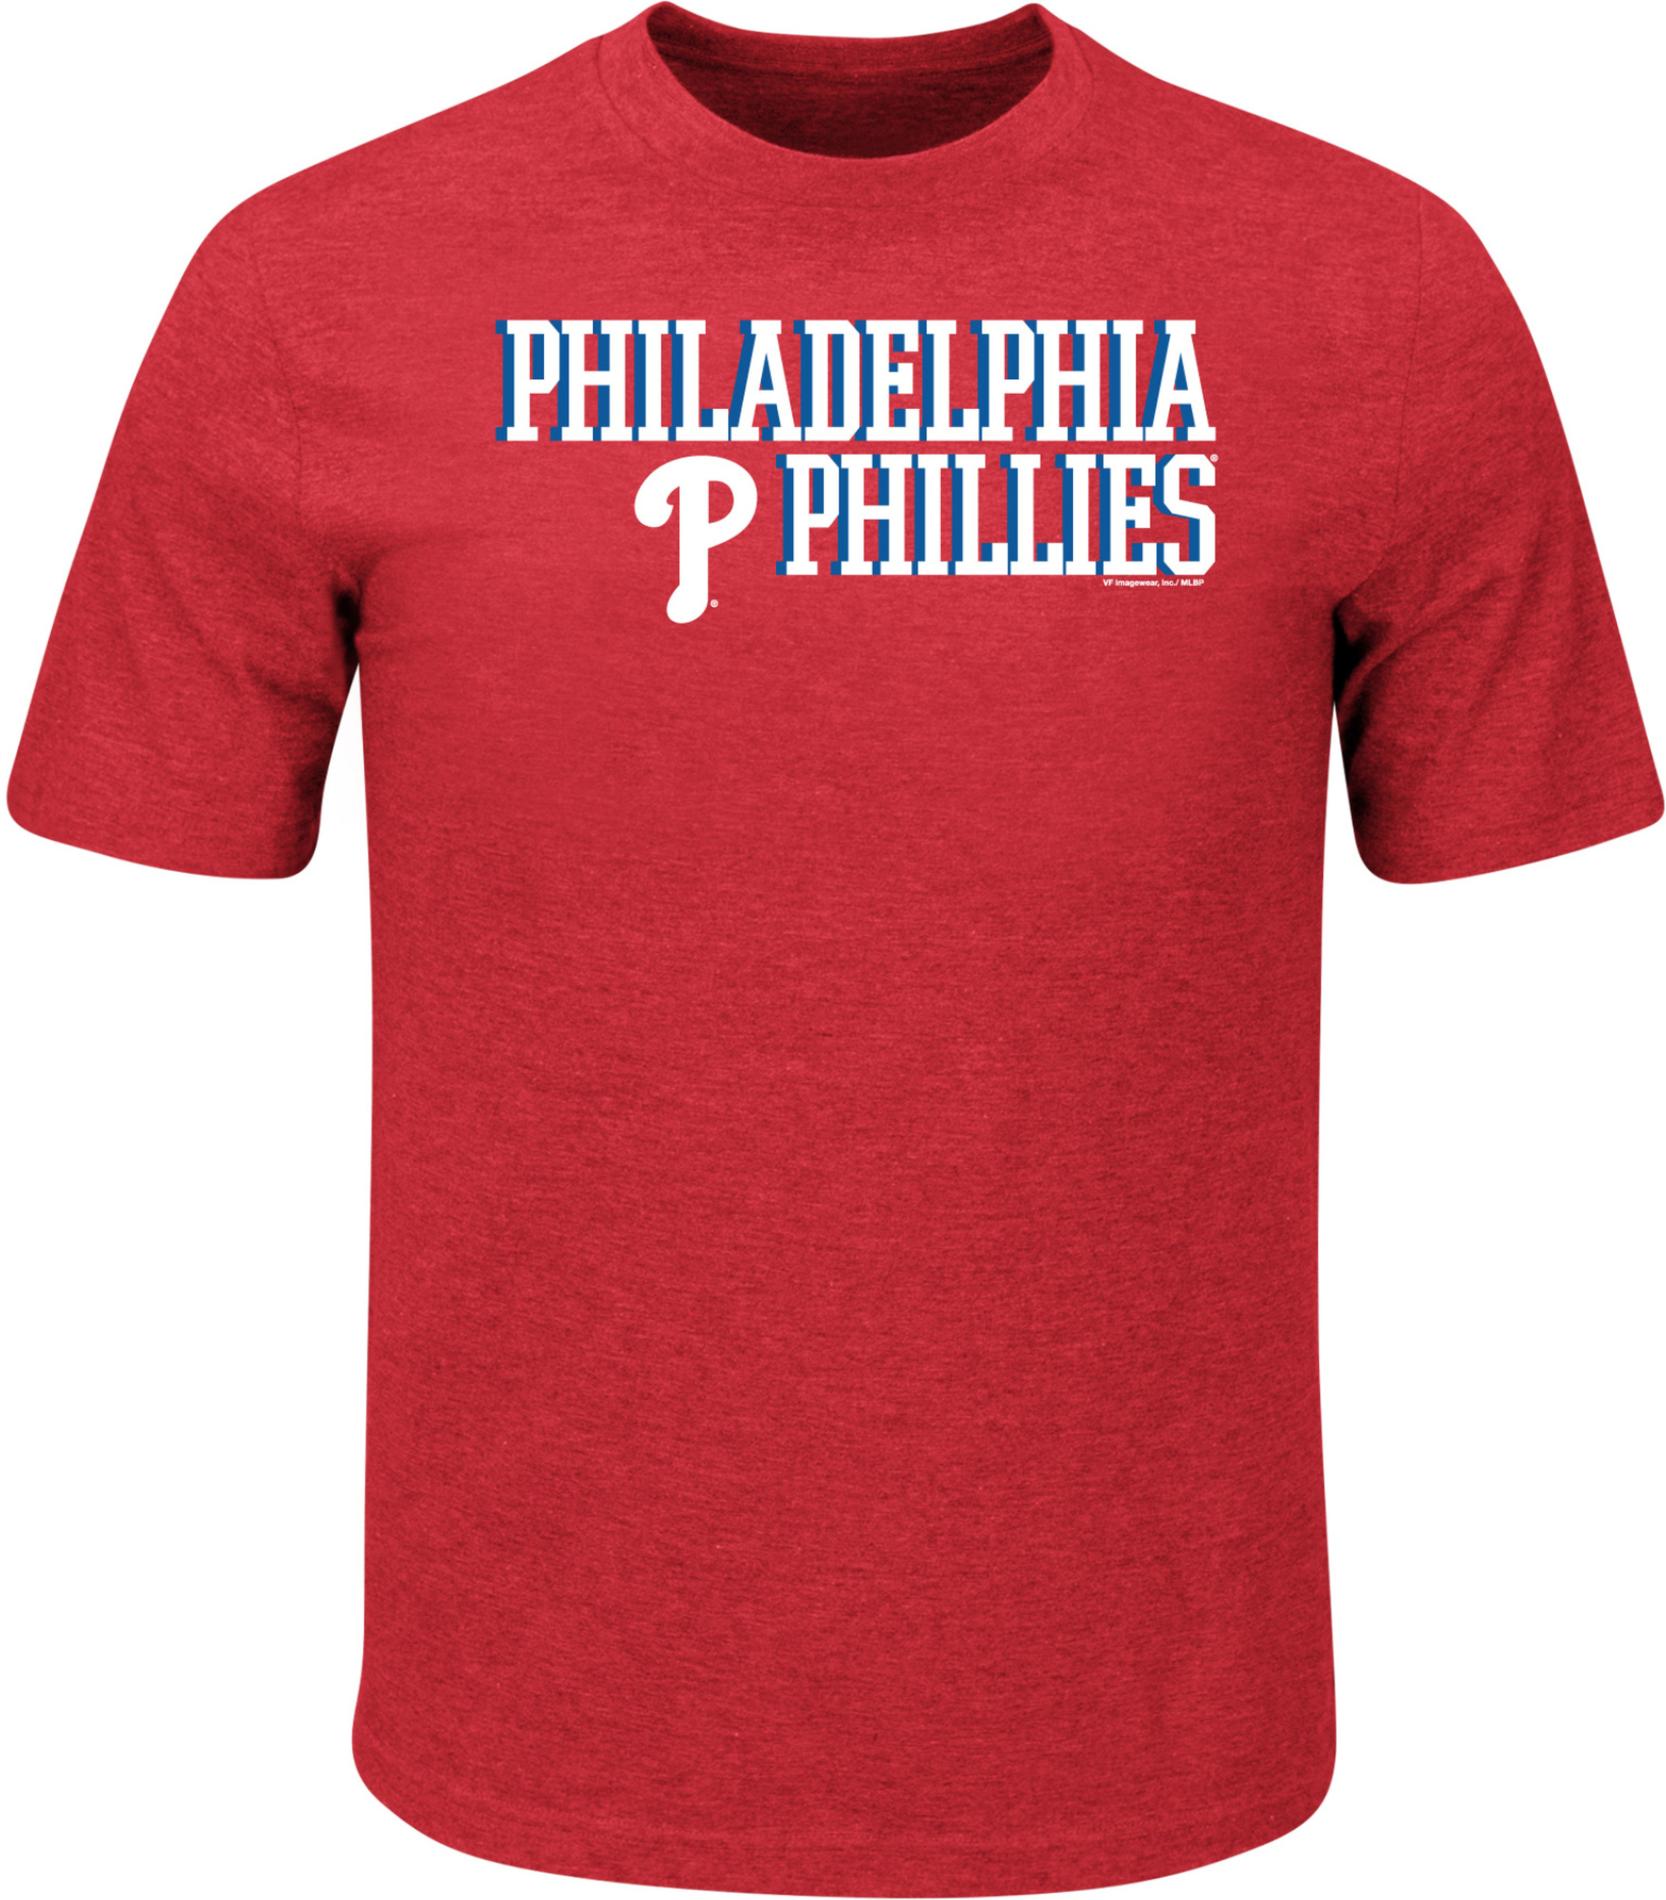 MLB Men's Graphic T-Shirt - Philadelphia Phillies